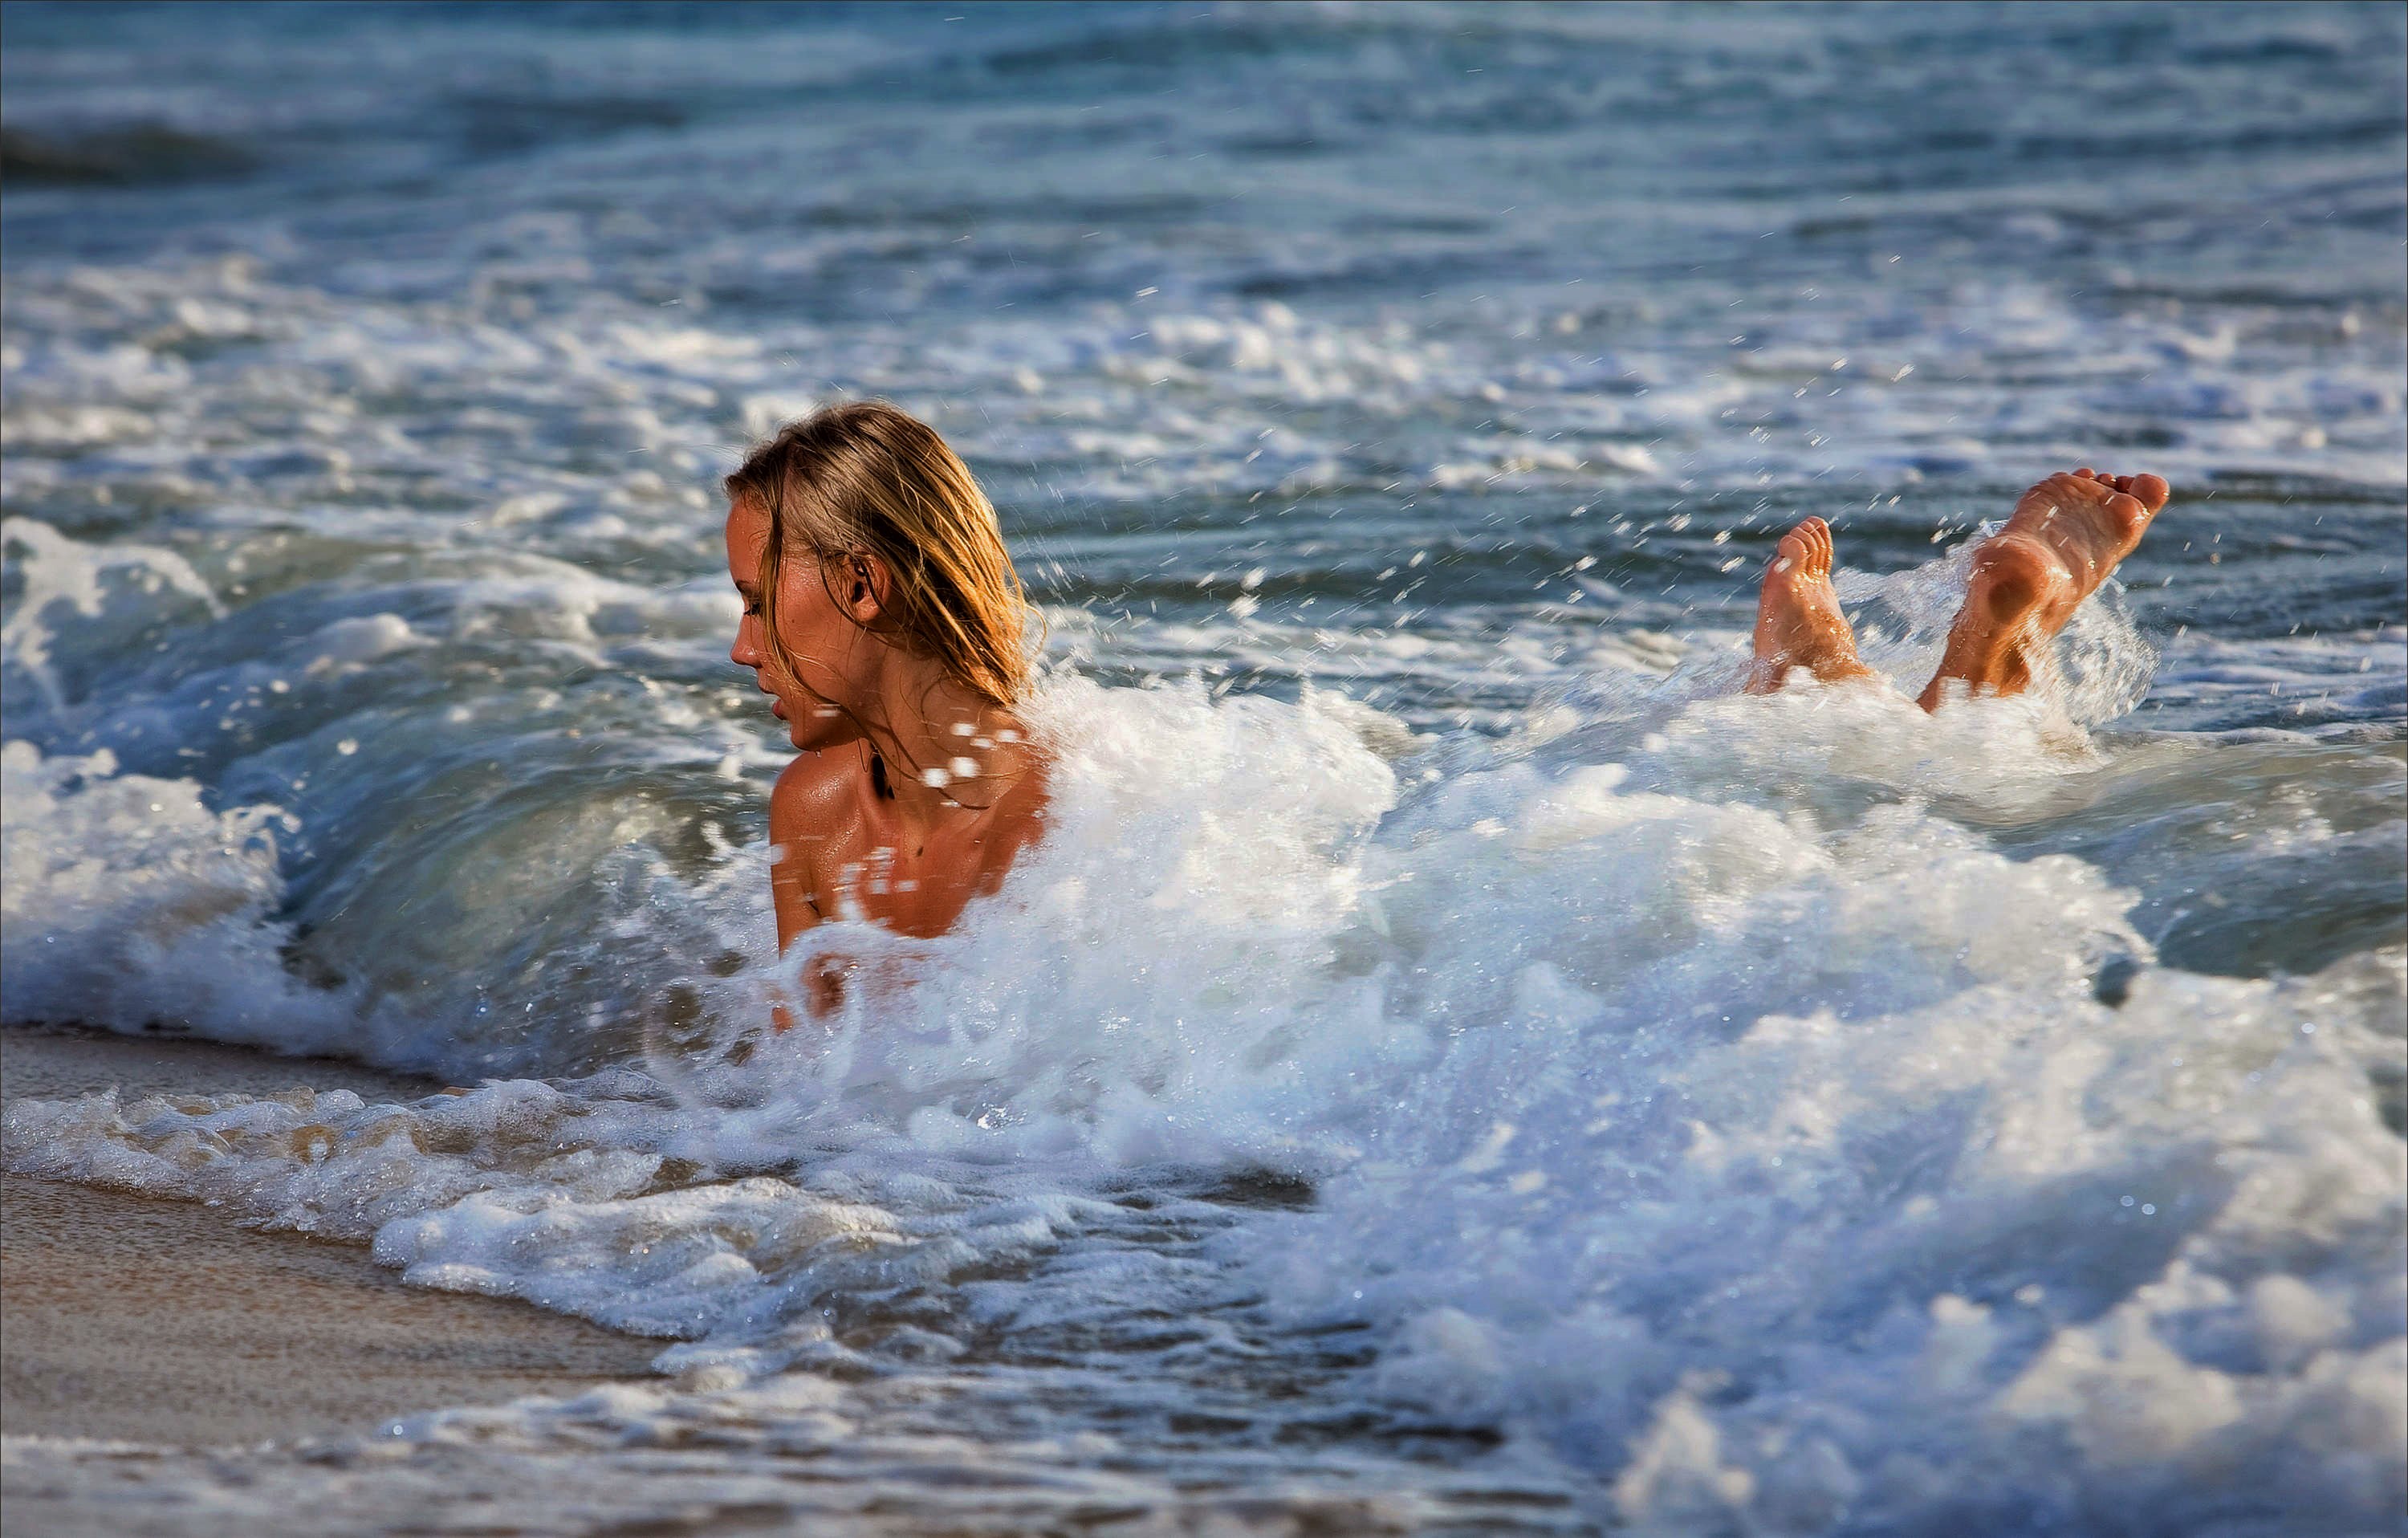 Море восторг. Девушка-море. Фотосессия на море. Девушка купается в море. Девушка в волнах моря.